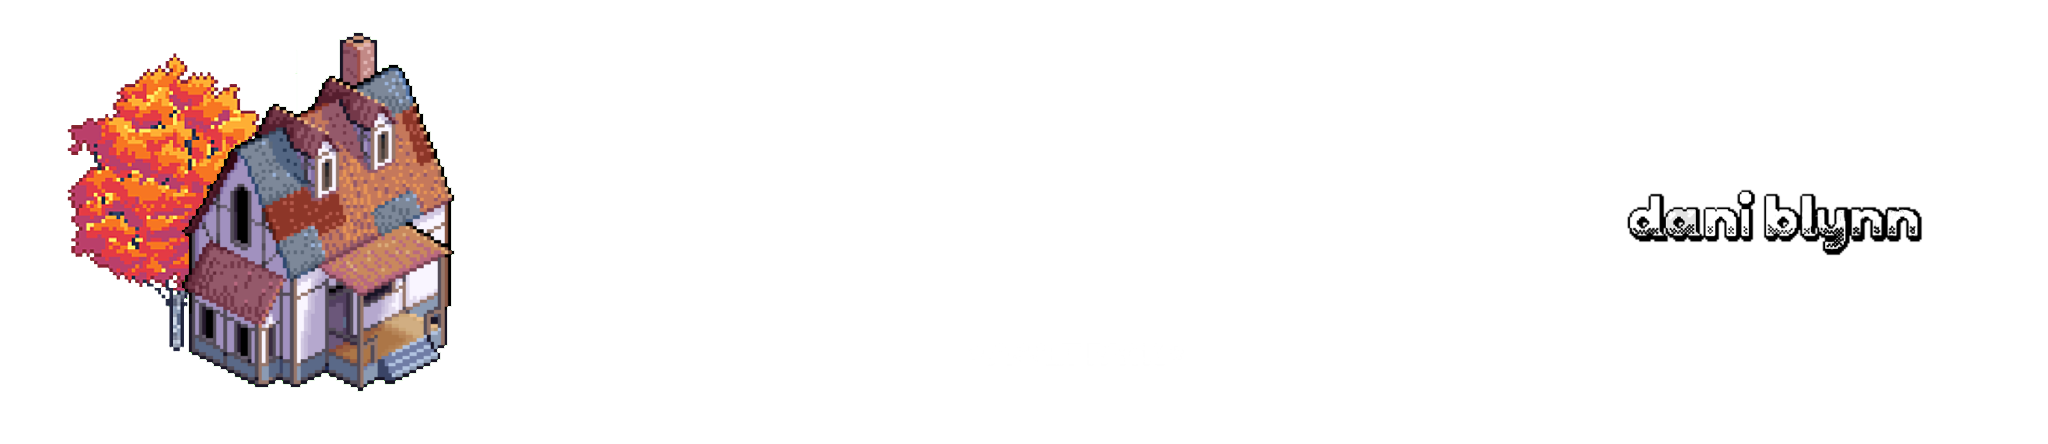 Maple Street - Asset Pack